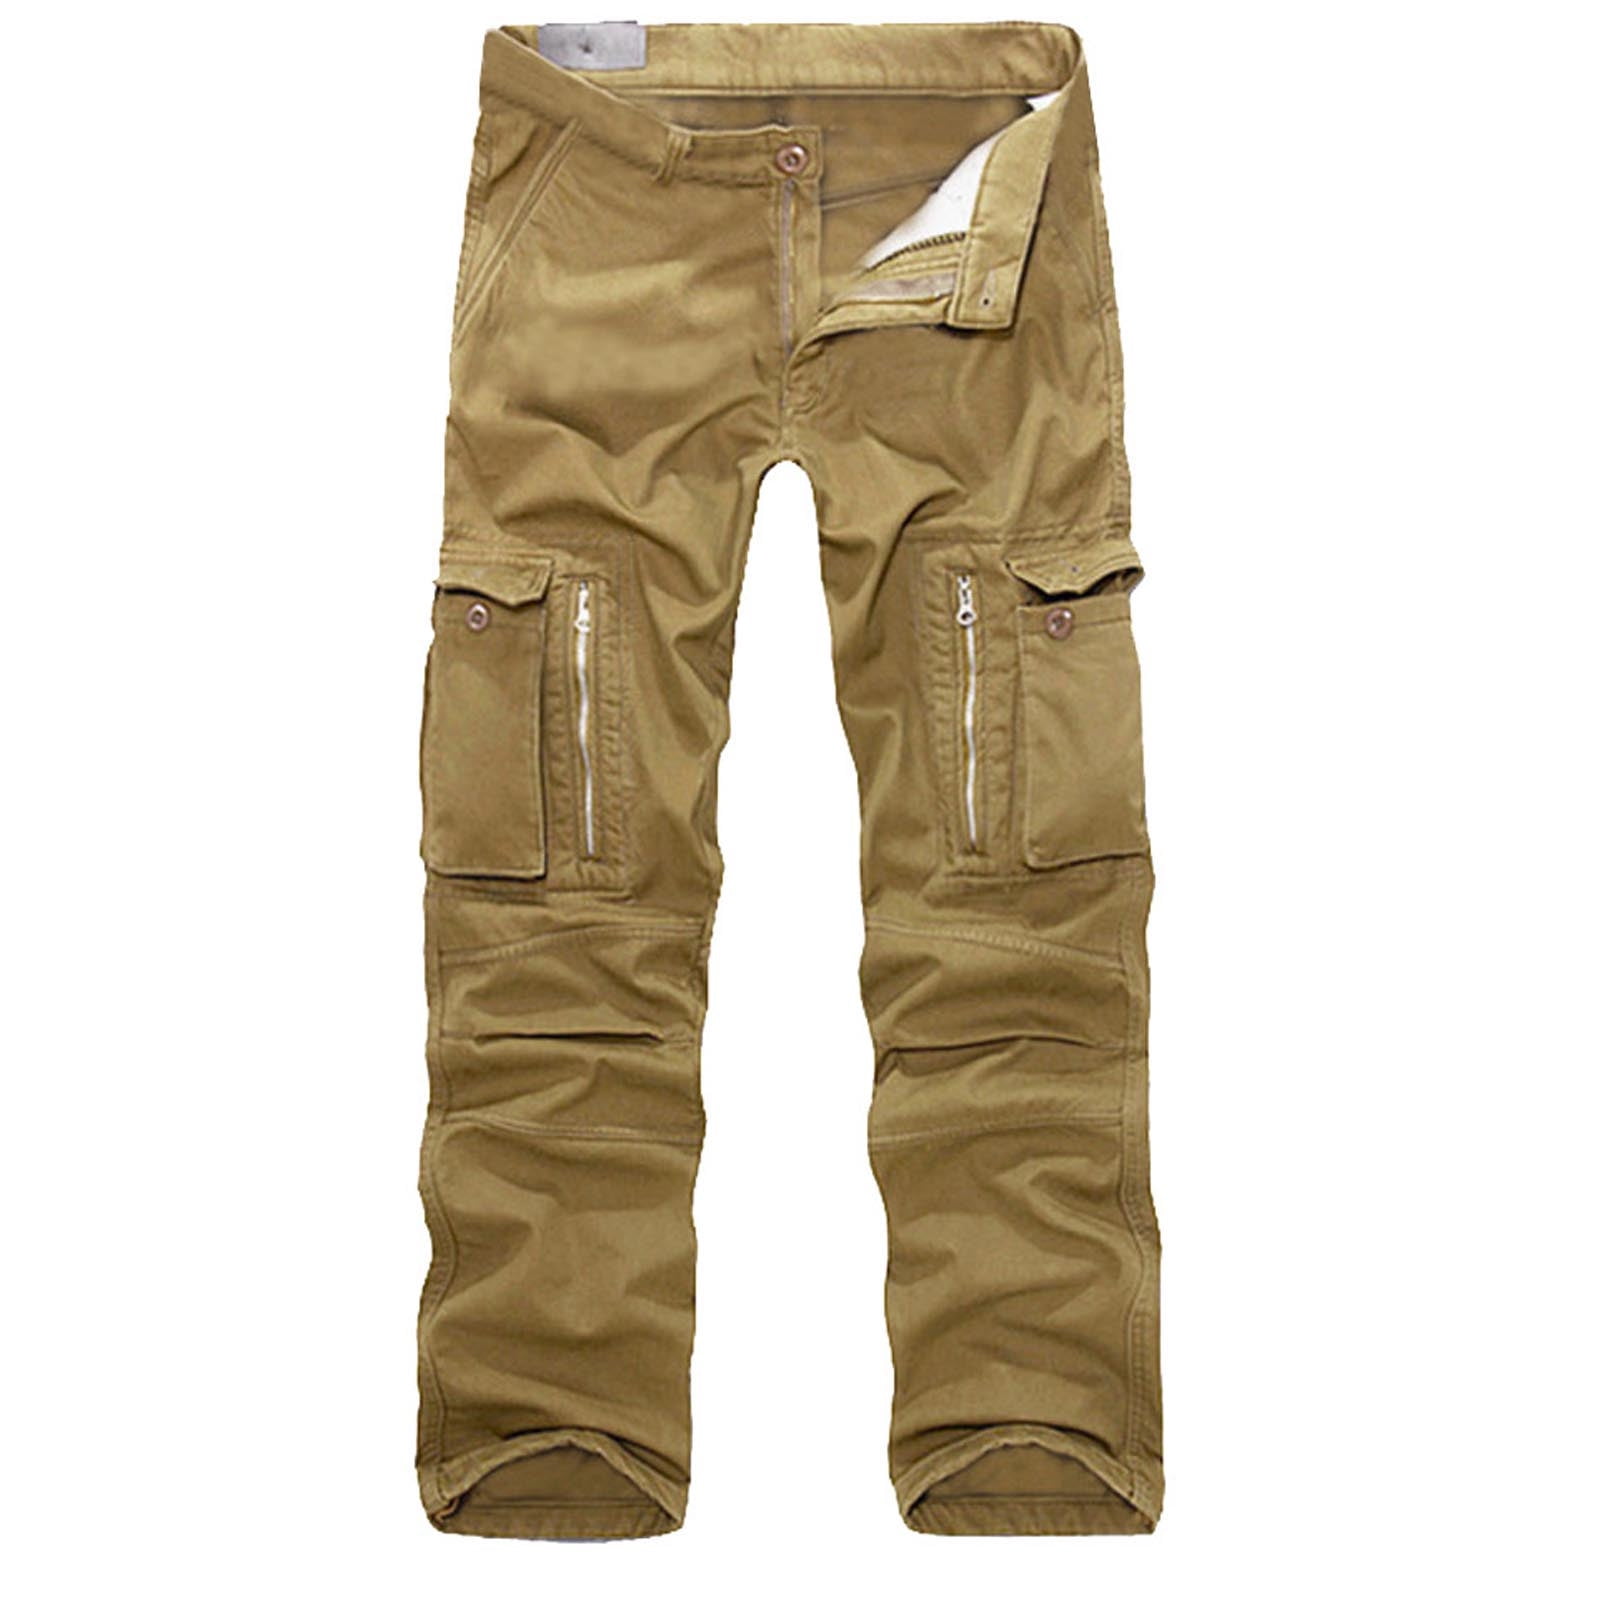 Hfyihgf Men's Fleece Lined Outdoor Cargo Pants Casual Winter Warm Trousers  Windproof Combat Work Ski Hiking Pants with Multi Pockets(Khaki,5XL)